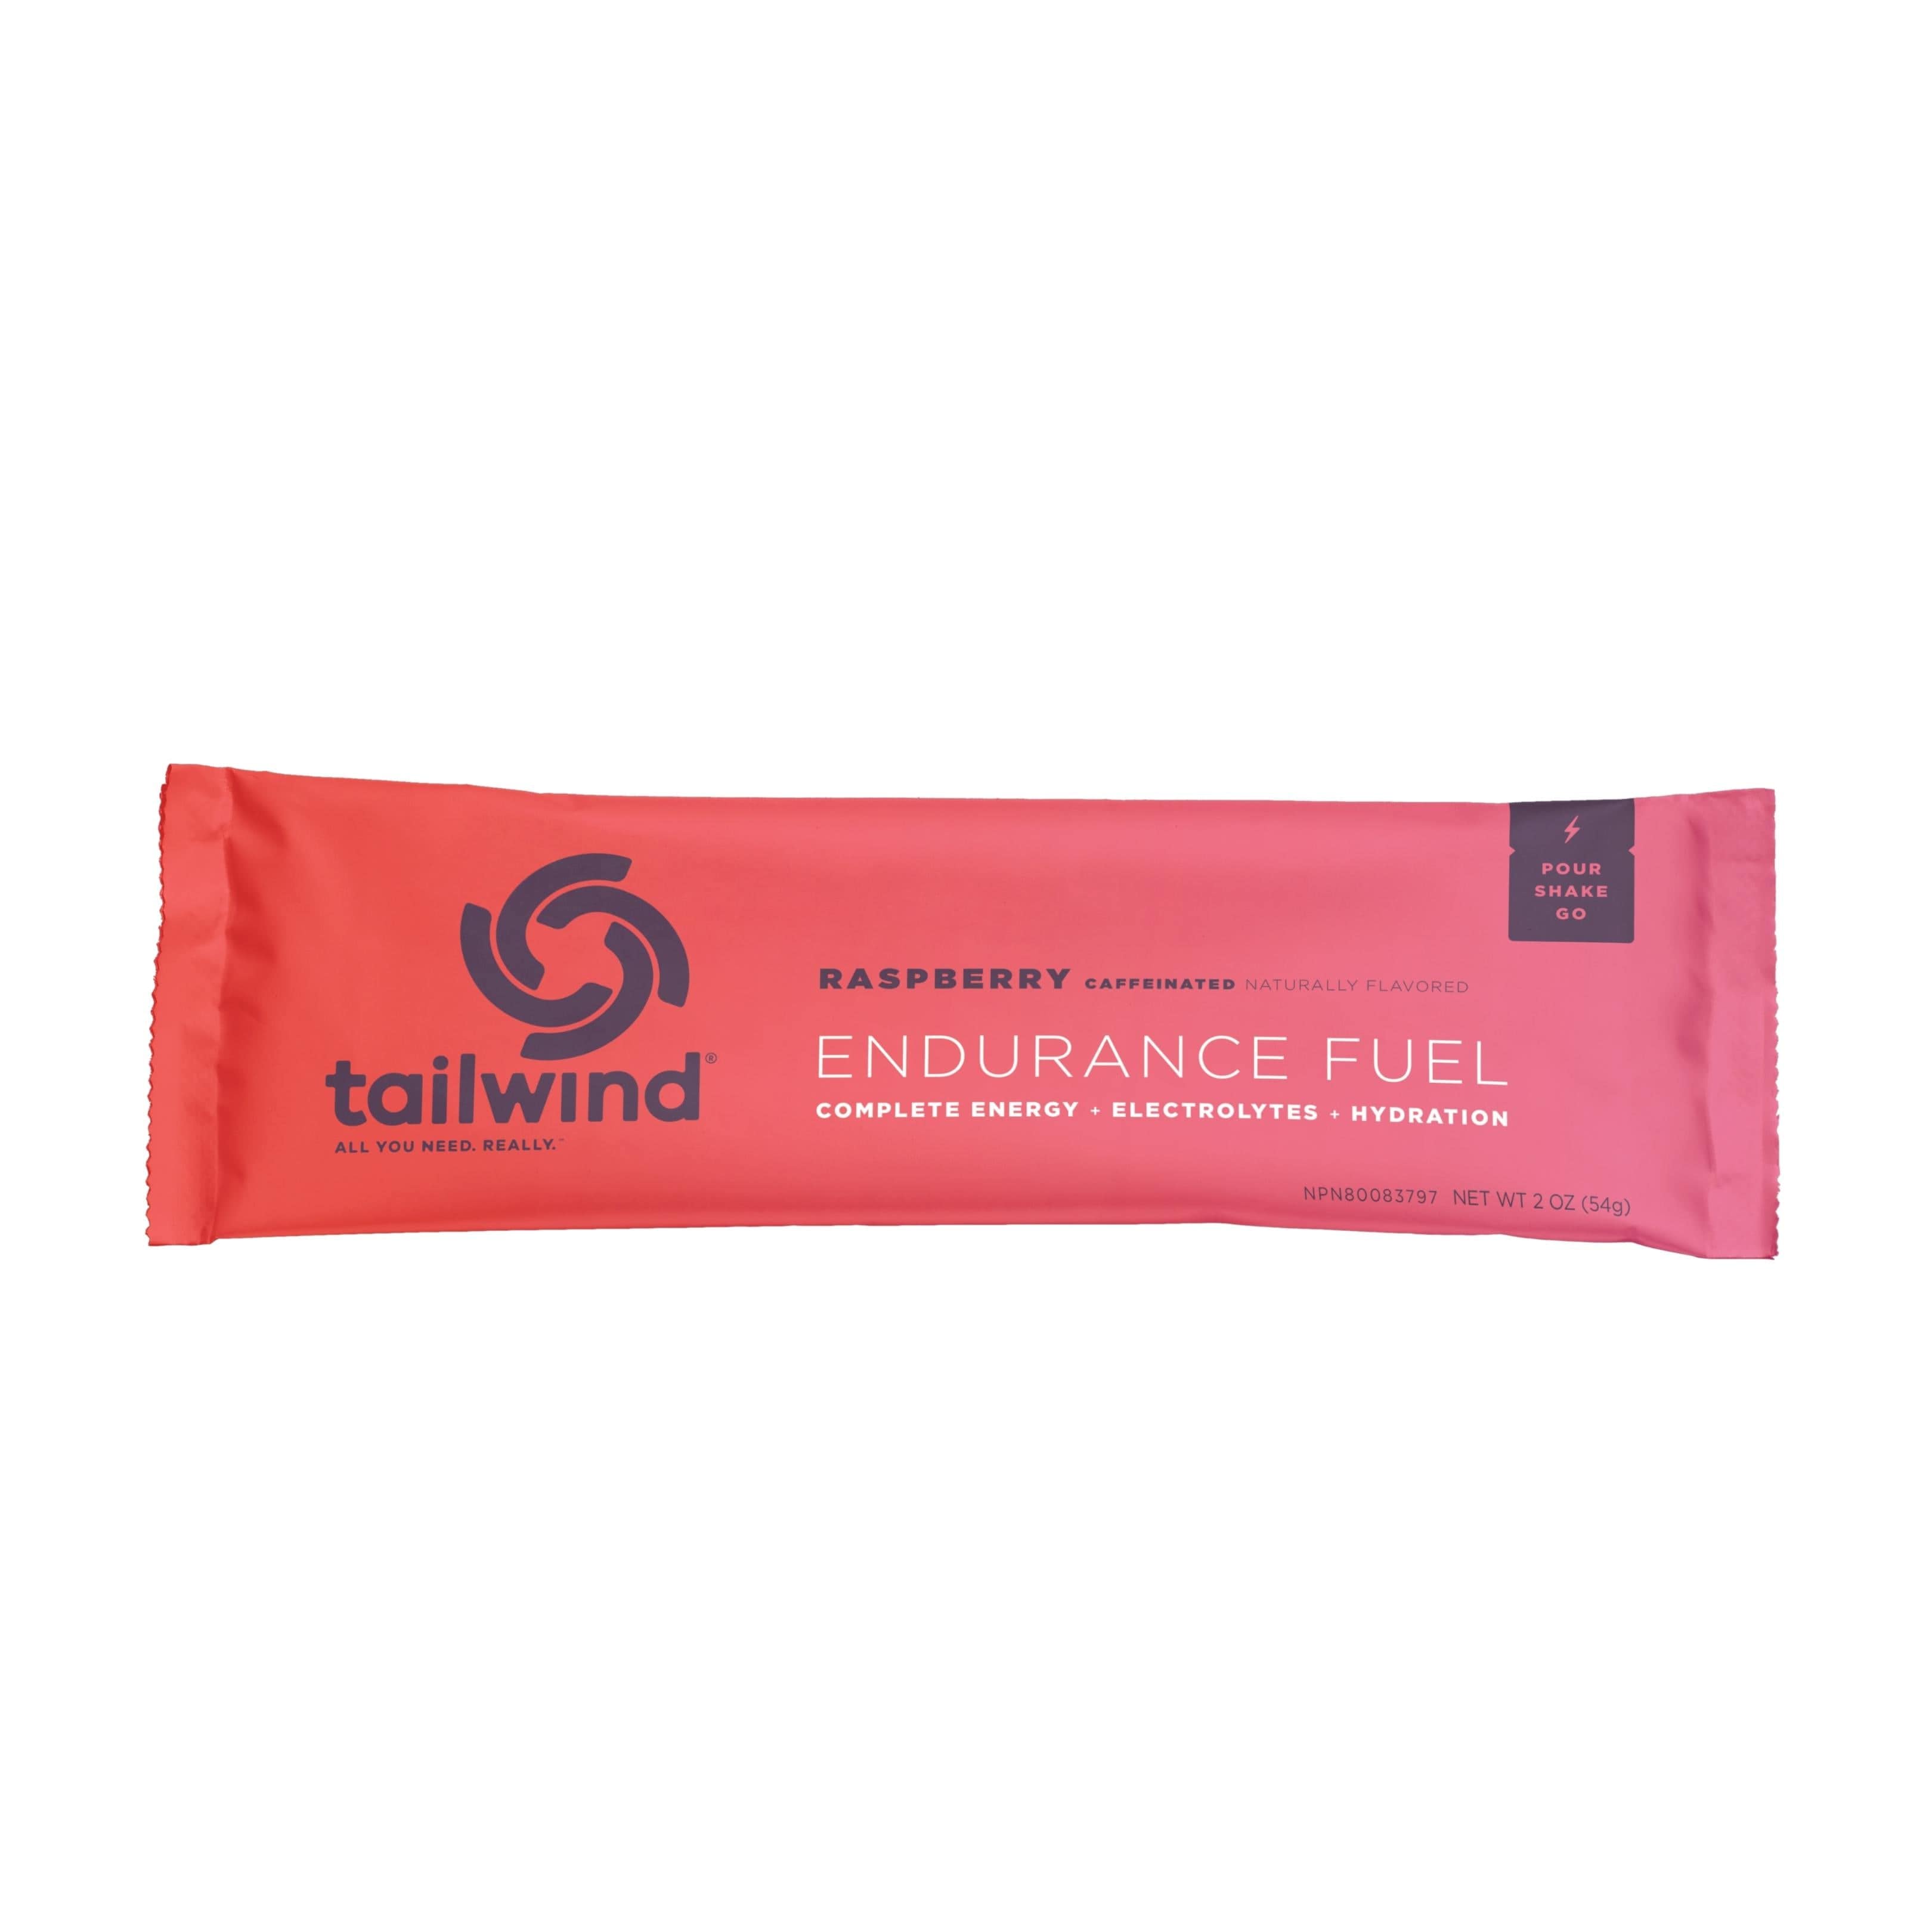 tailwind Nutrition Supplement Stick (2 servings) / Raspberry (36mg Caffeine) Endurance Fuel Drink Mix 8 55283 00504 0